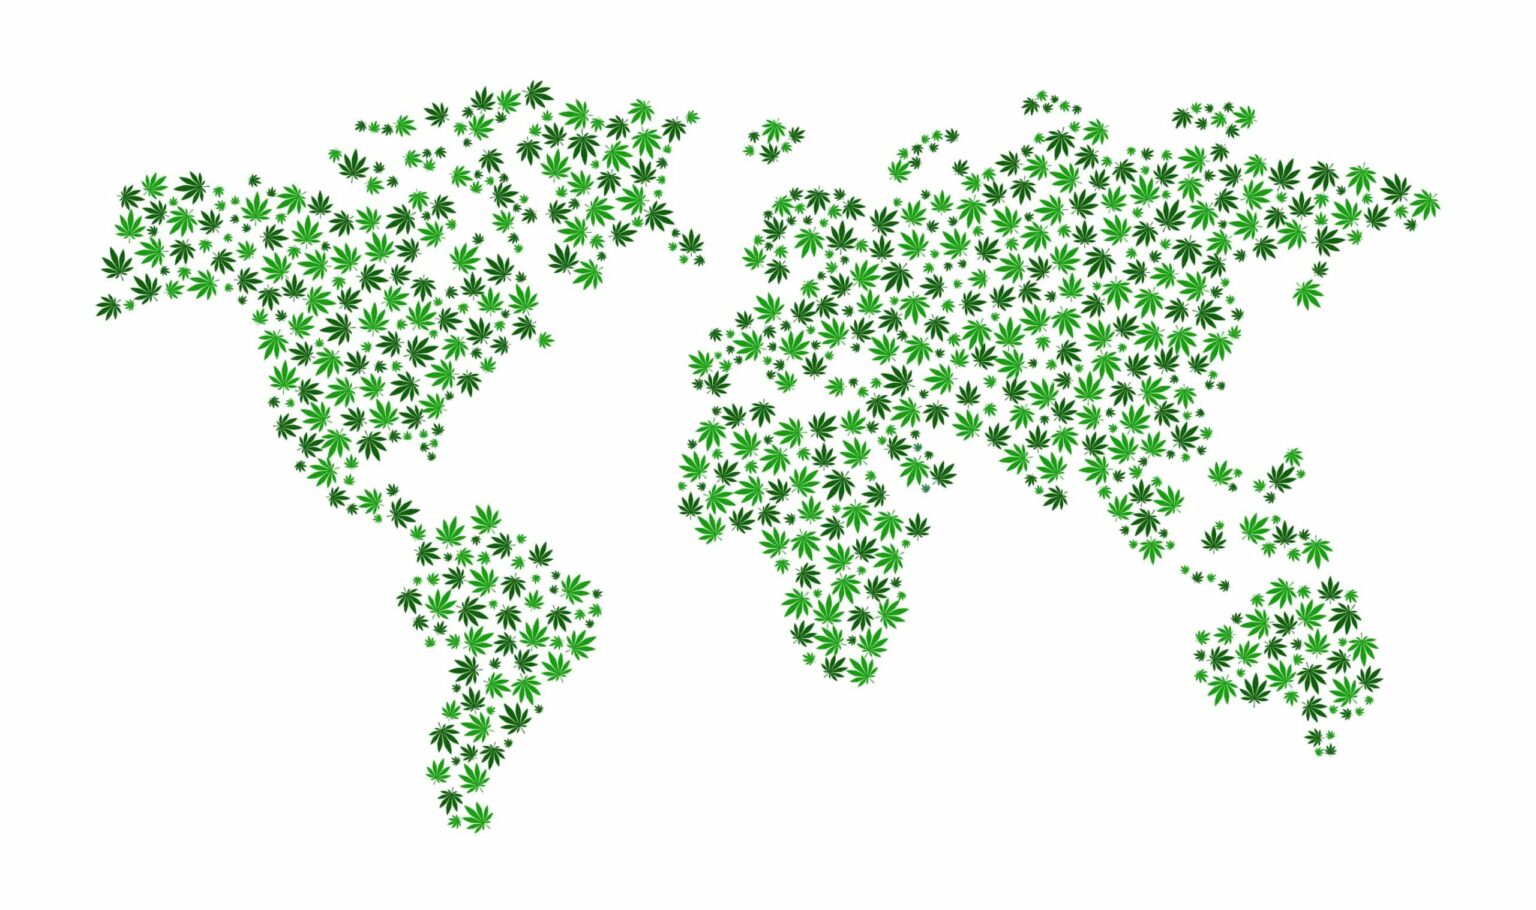 420 timeslice world map